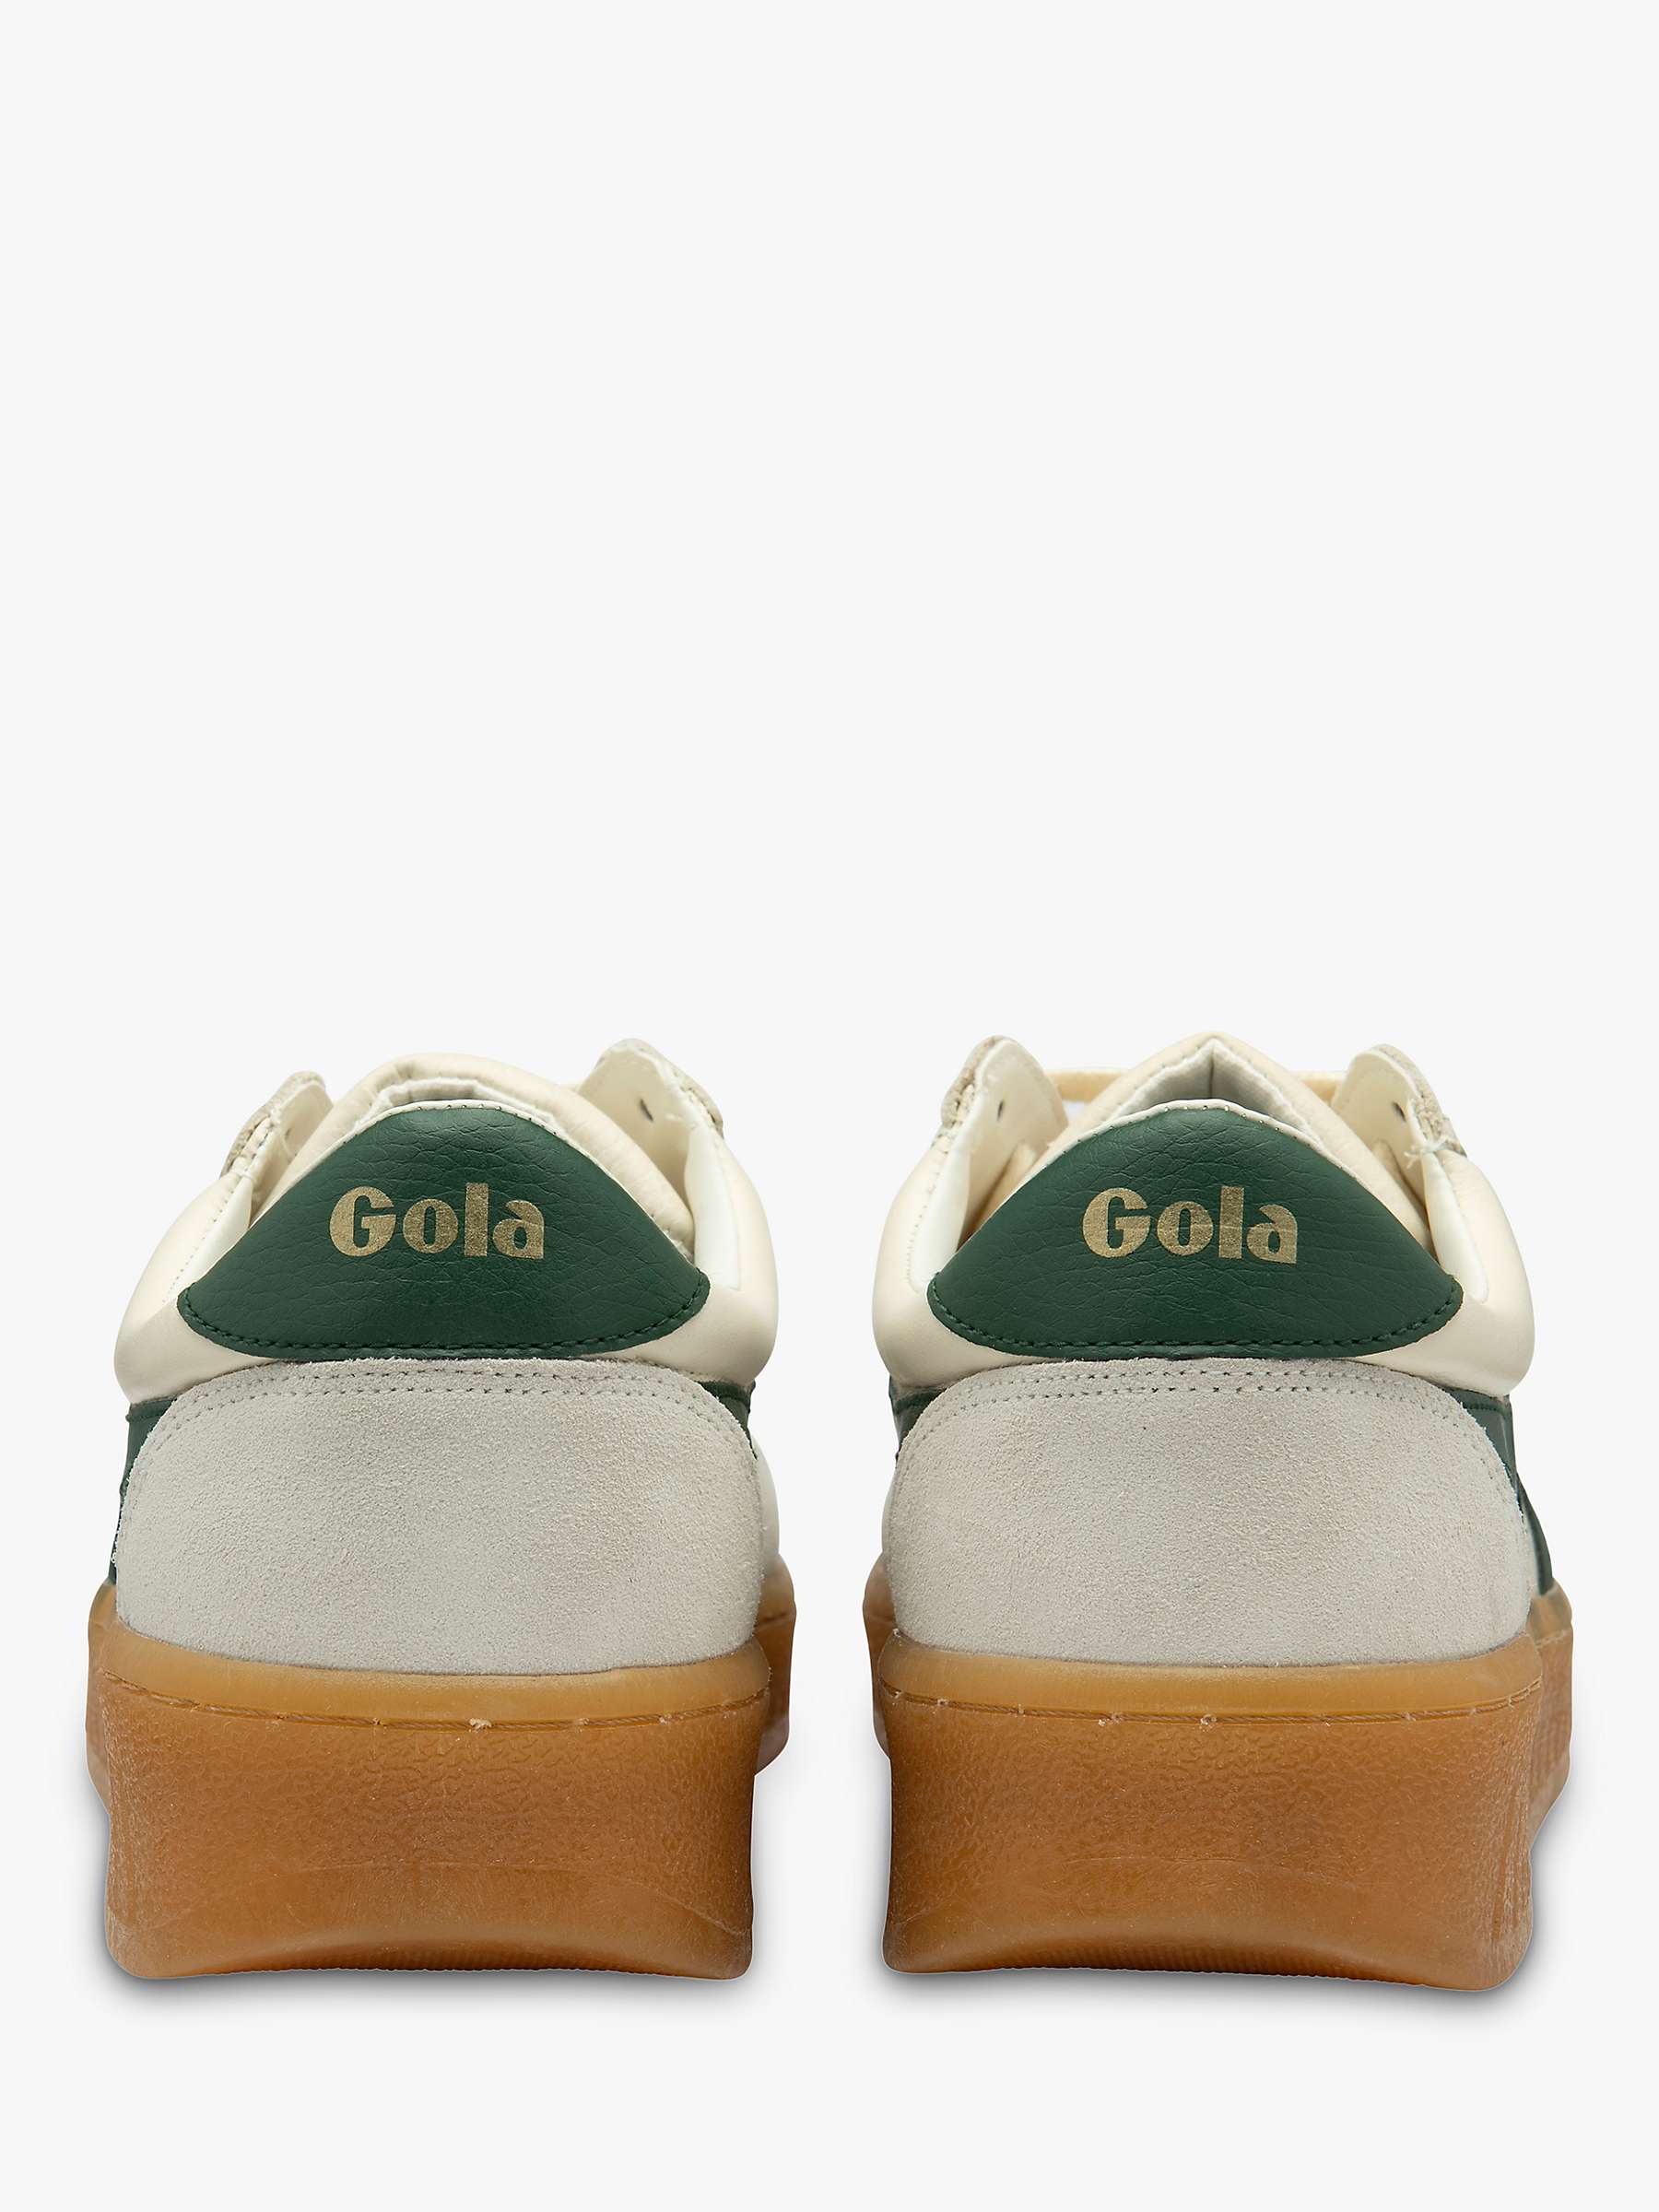 Buy Gola Classics Grandslam Elite Leather Trainers, Off White/Evergreen/Gum Online at johnlewis.com